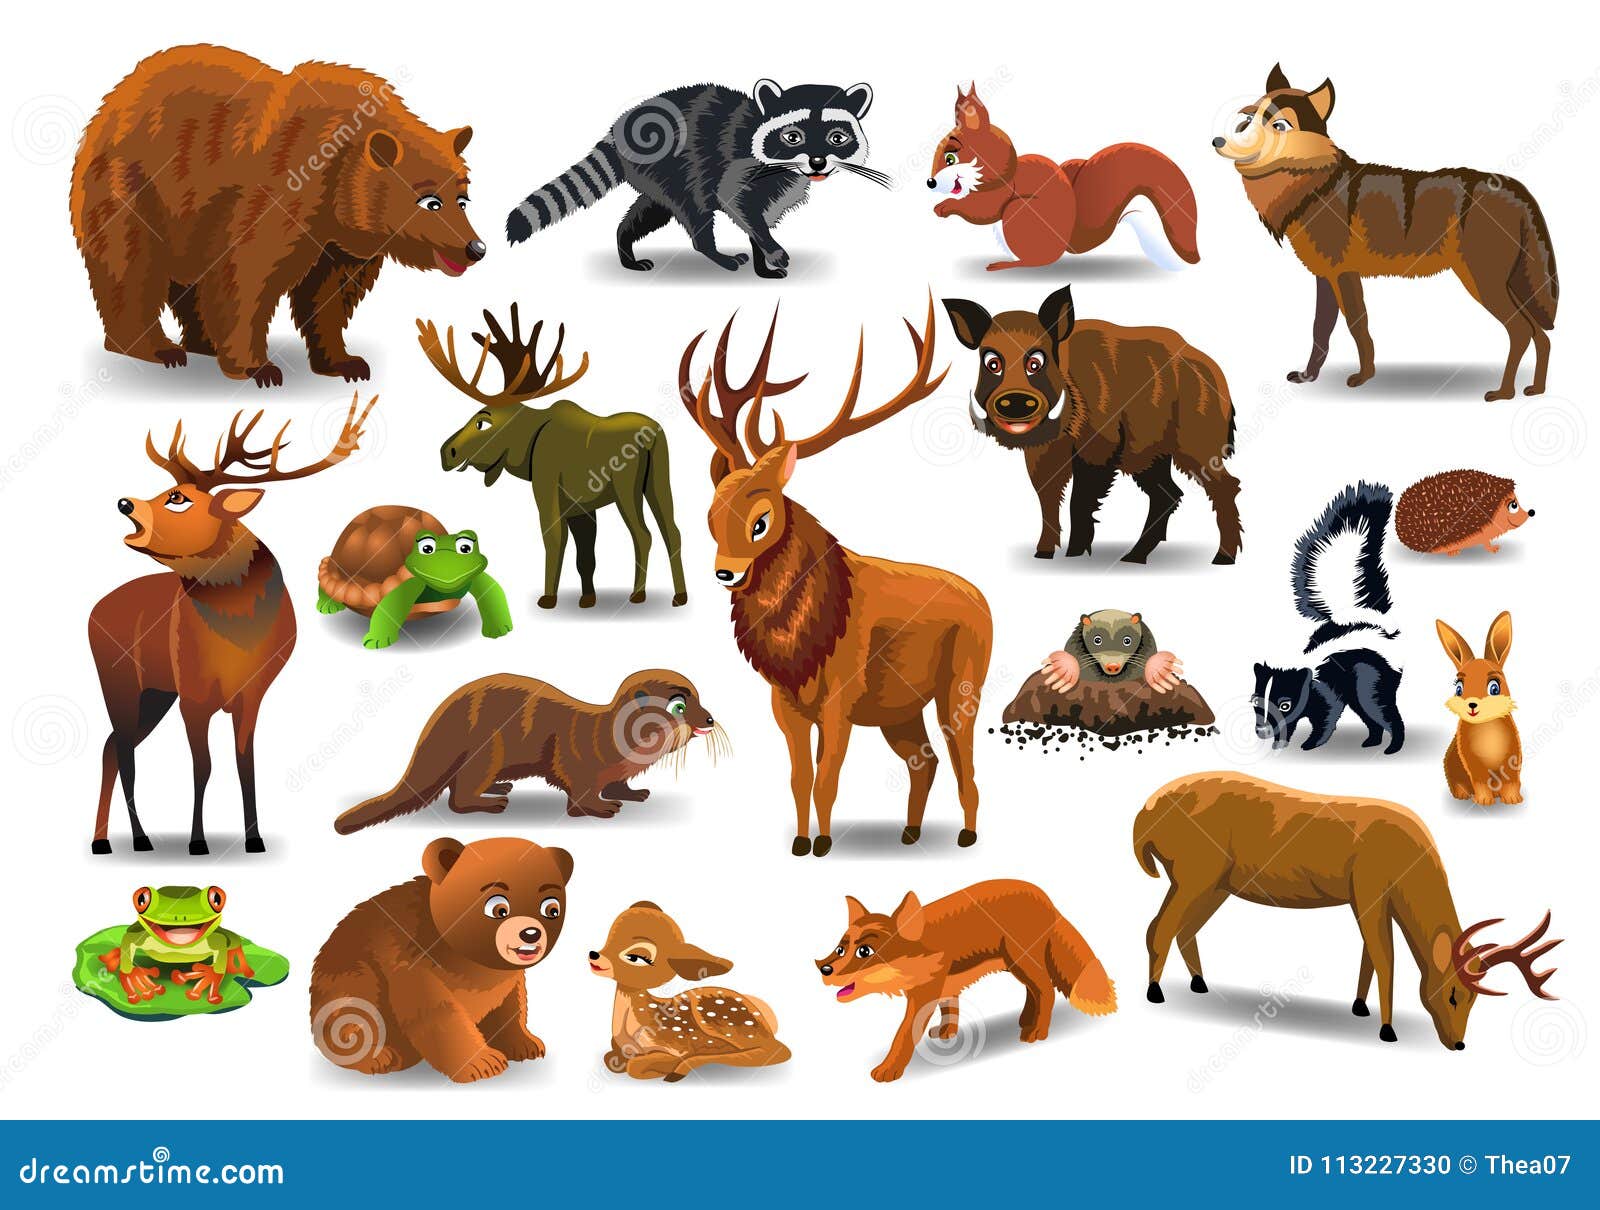  set of wild forest animals like stag, bear, wolf, fox, tortoise